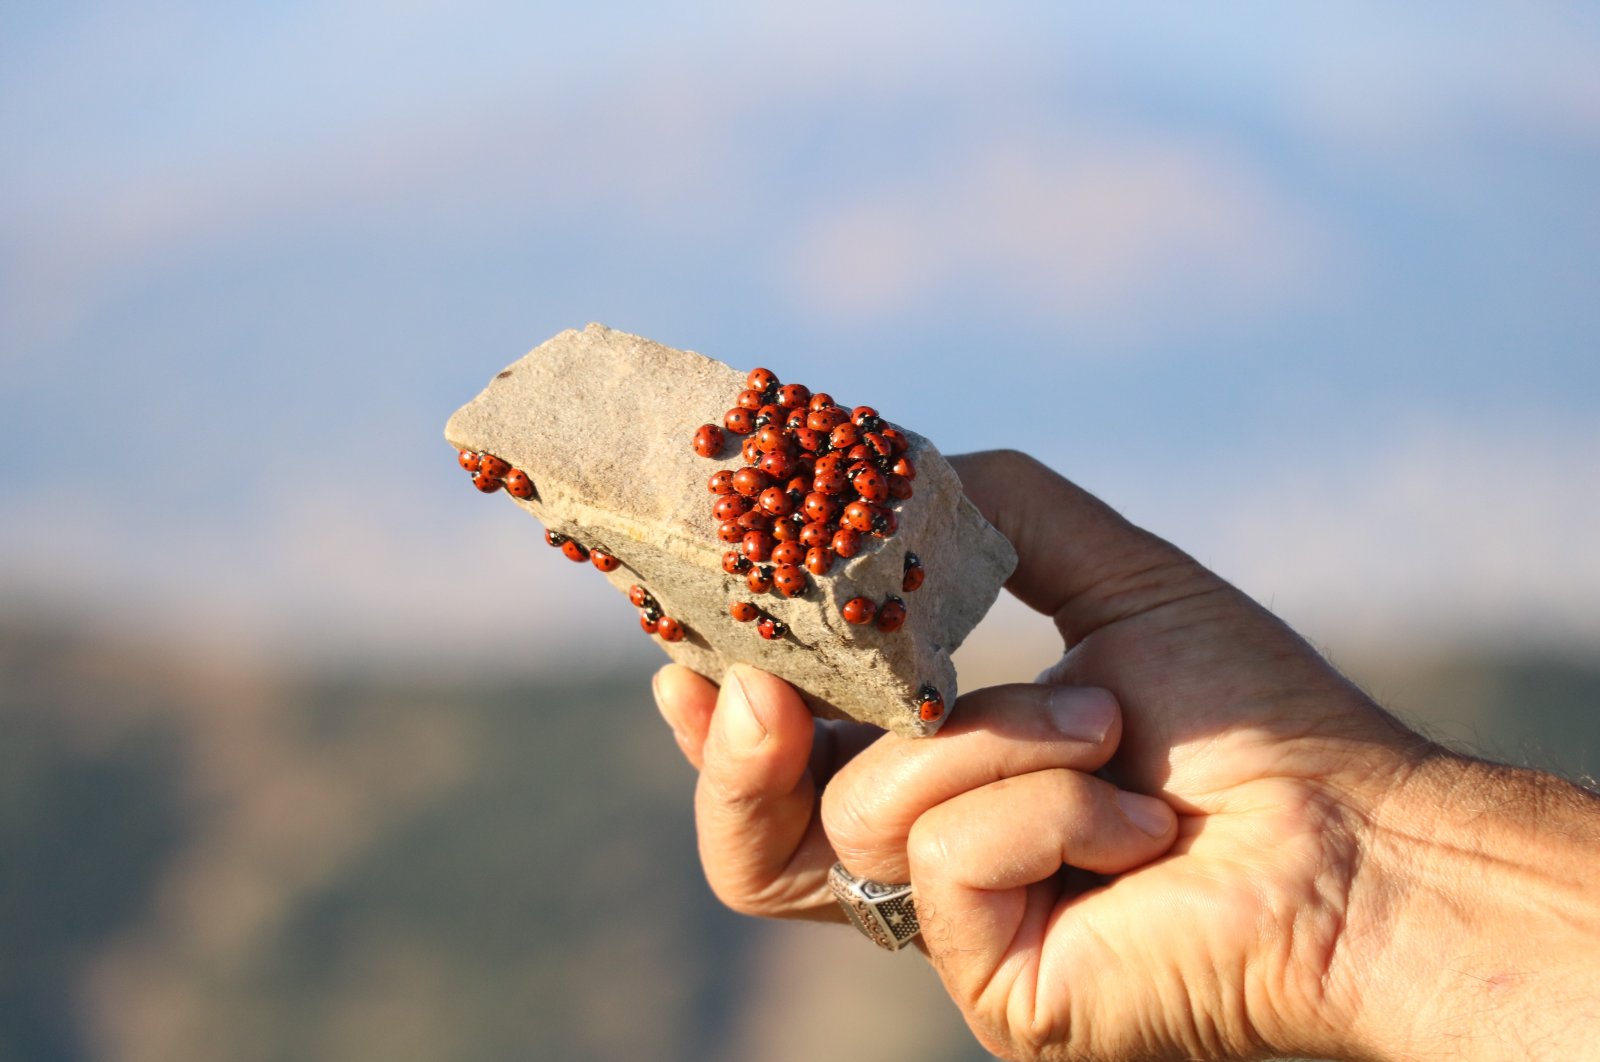 Ribuan orang berduyun-duyun untuk melihat koloni ladybug yang menakjubkan di Türkiye